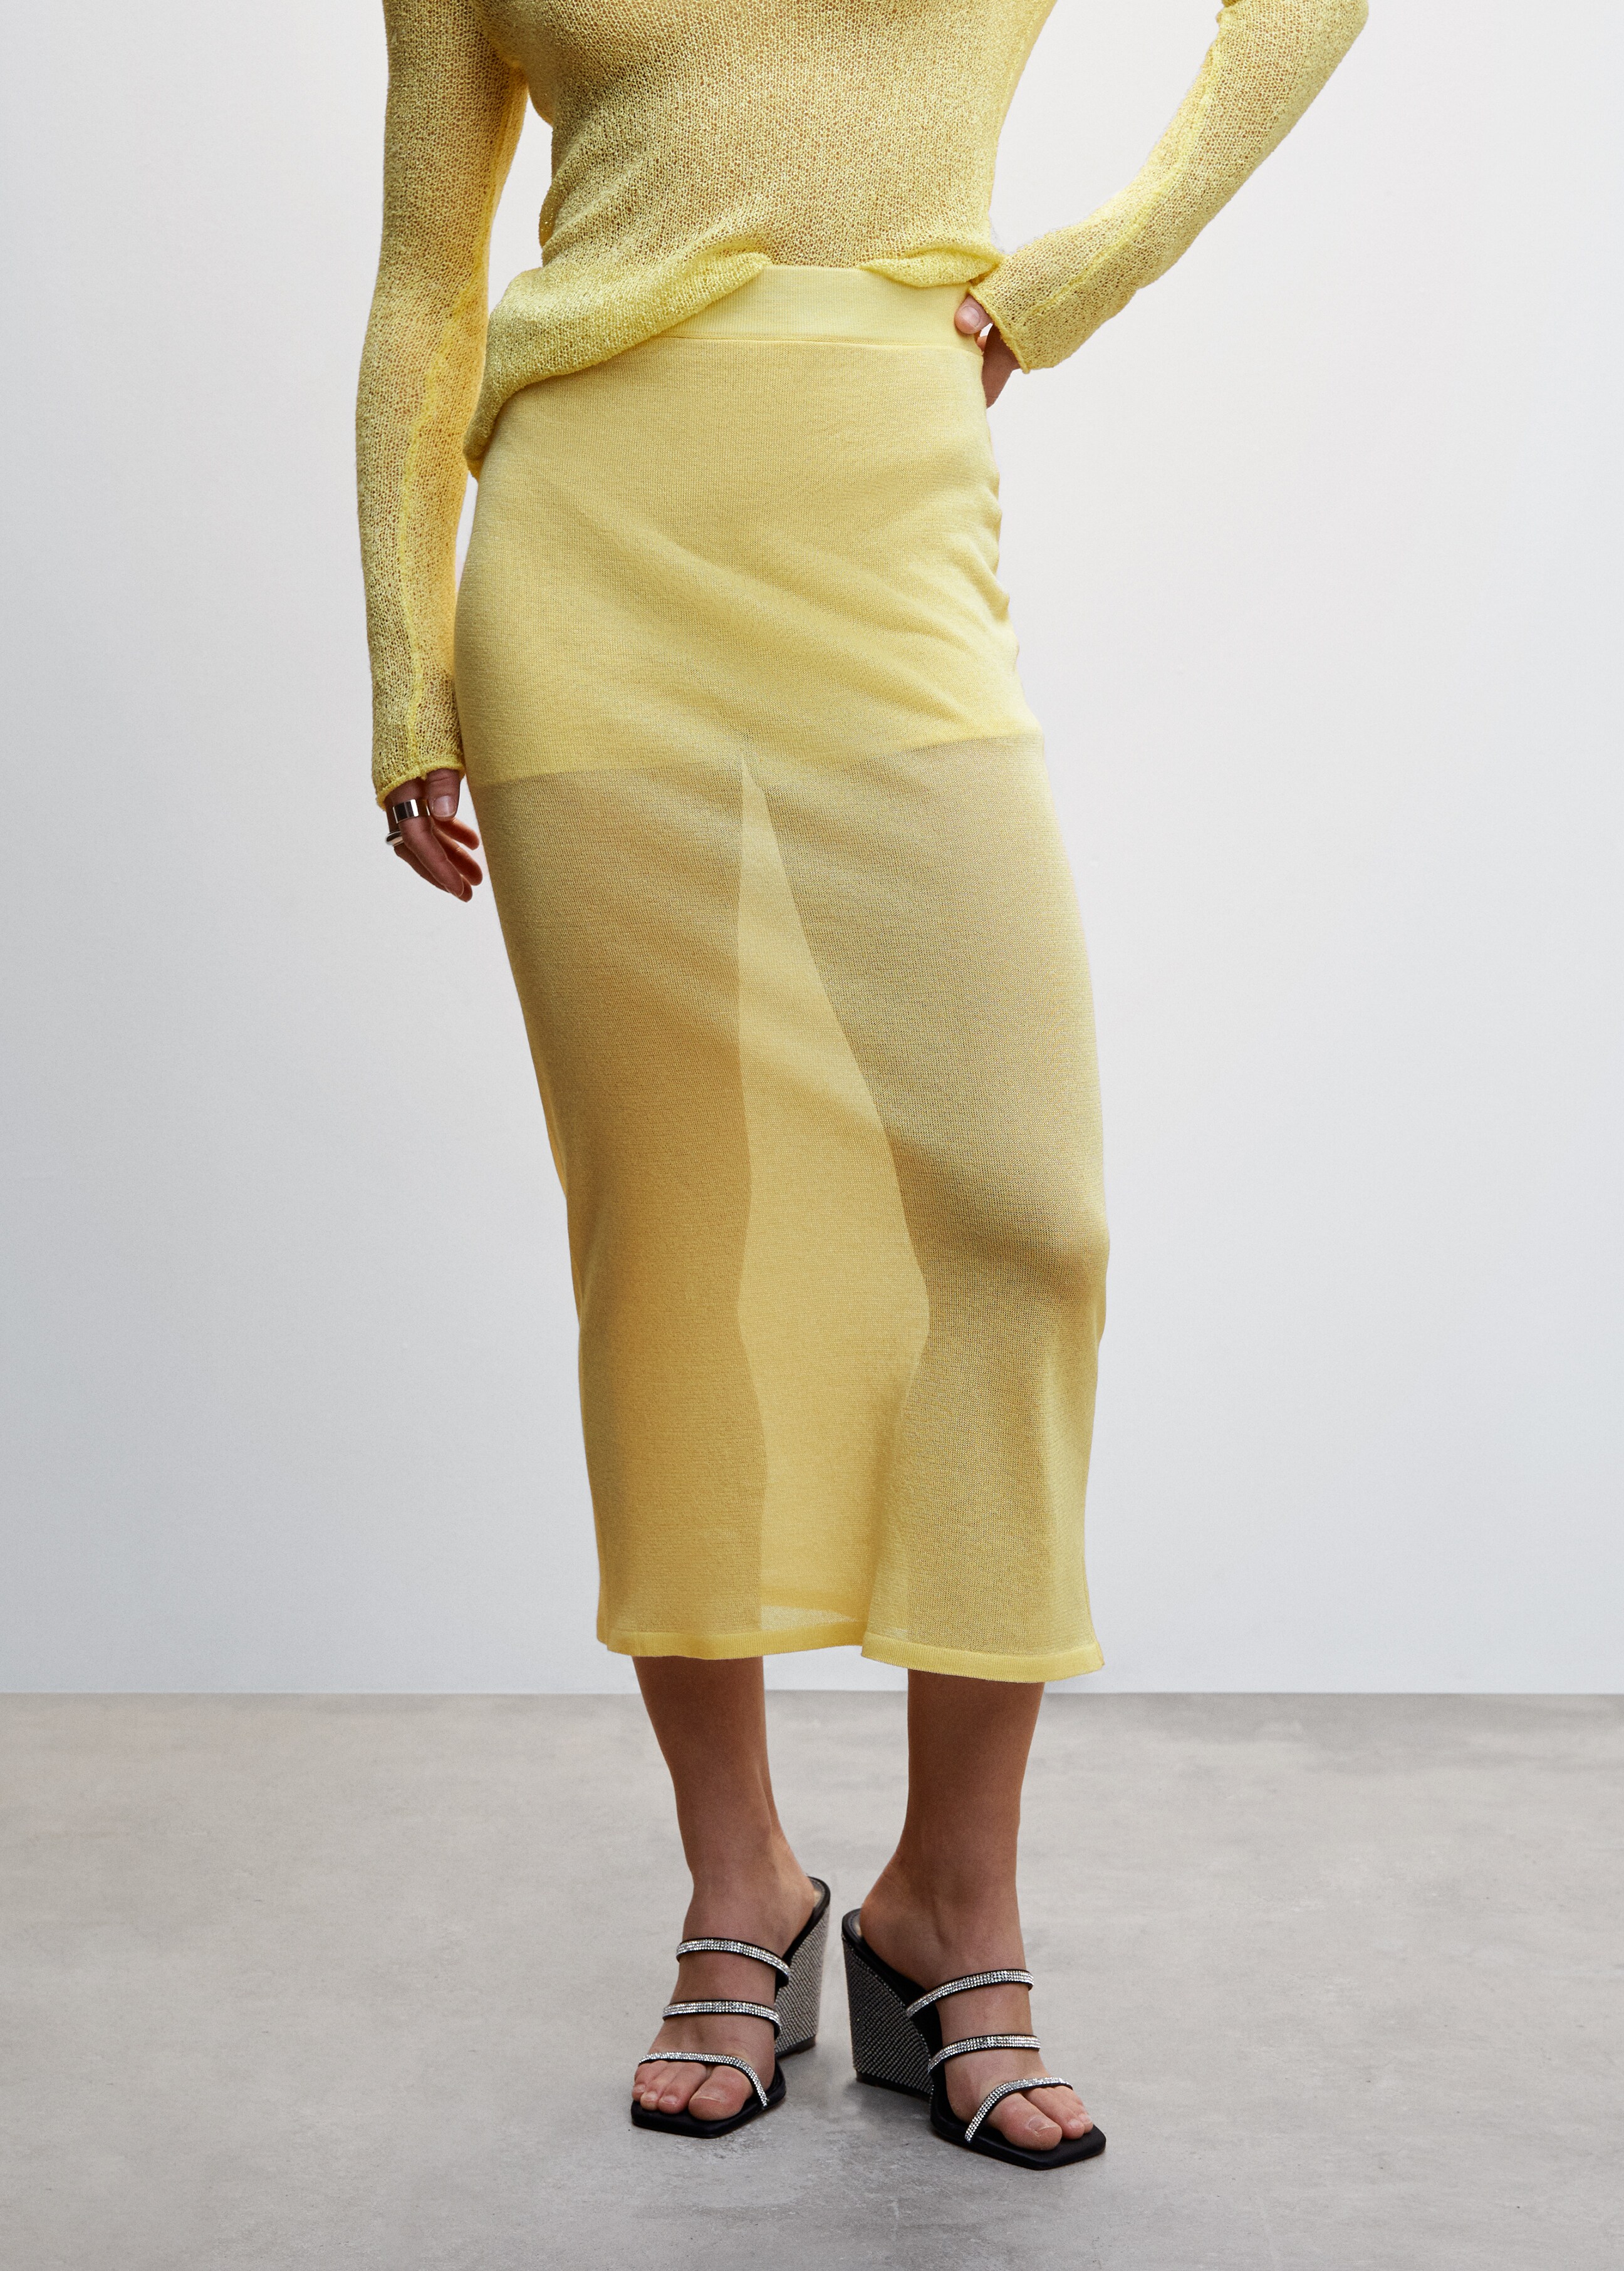 Semi-transparent knitted skirt - Medium plane